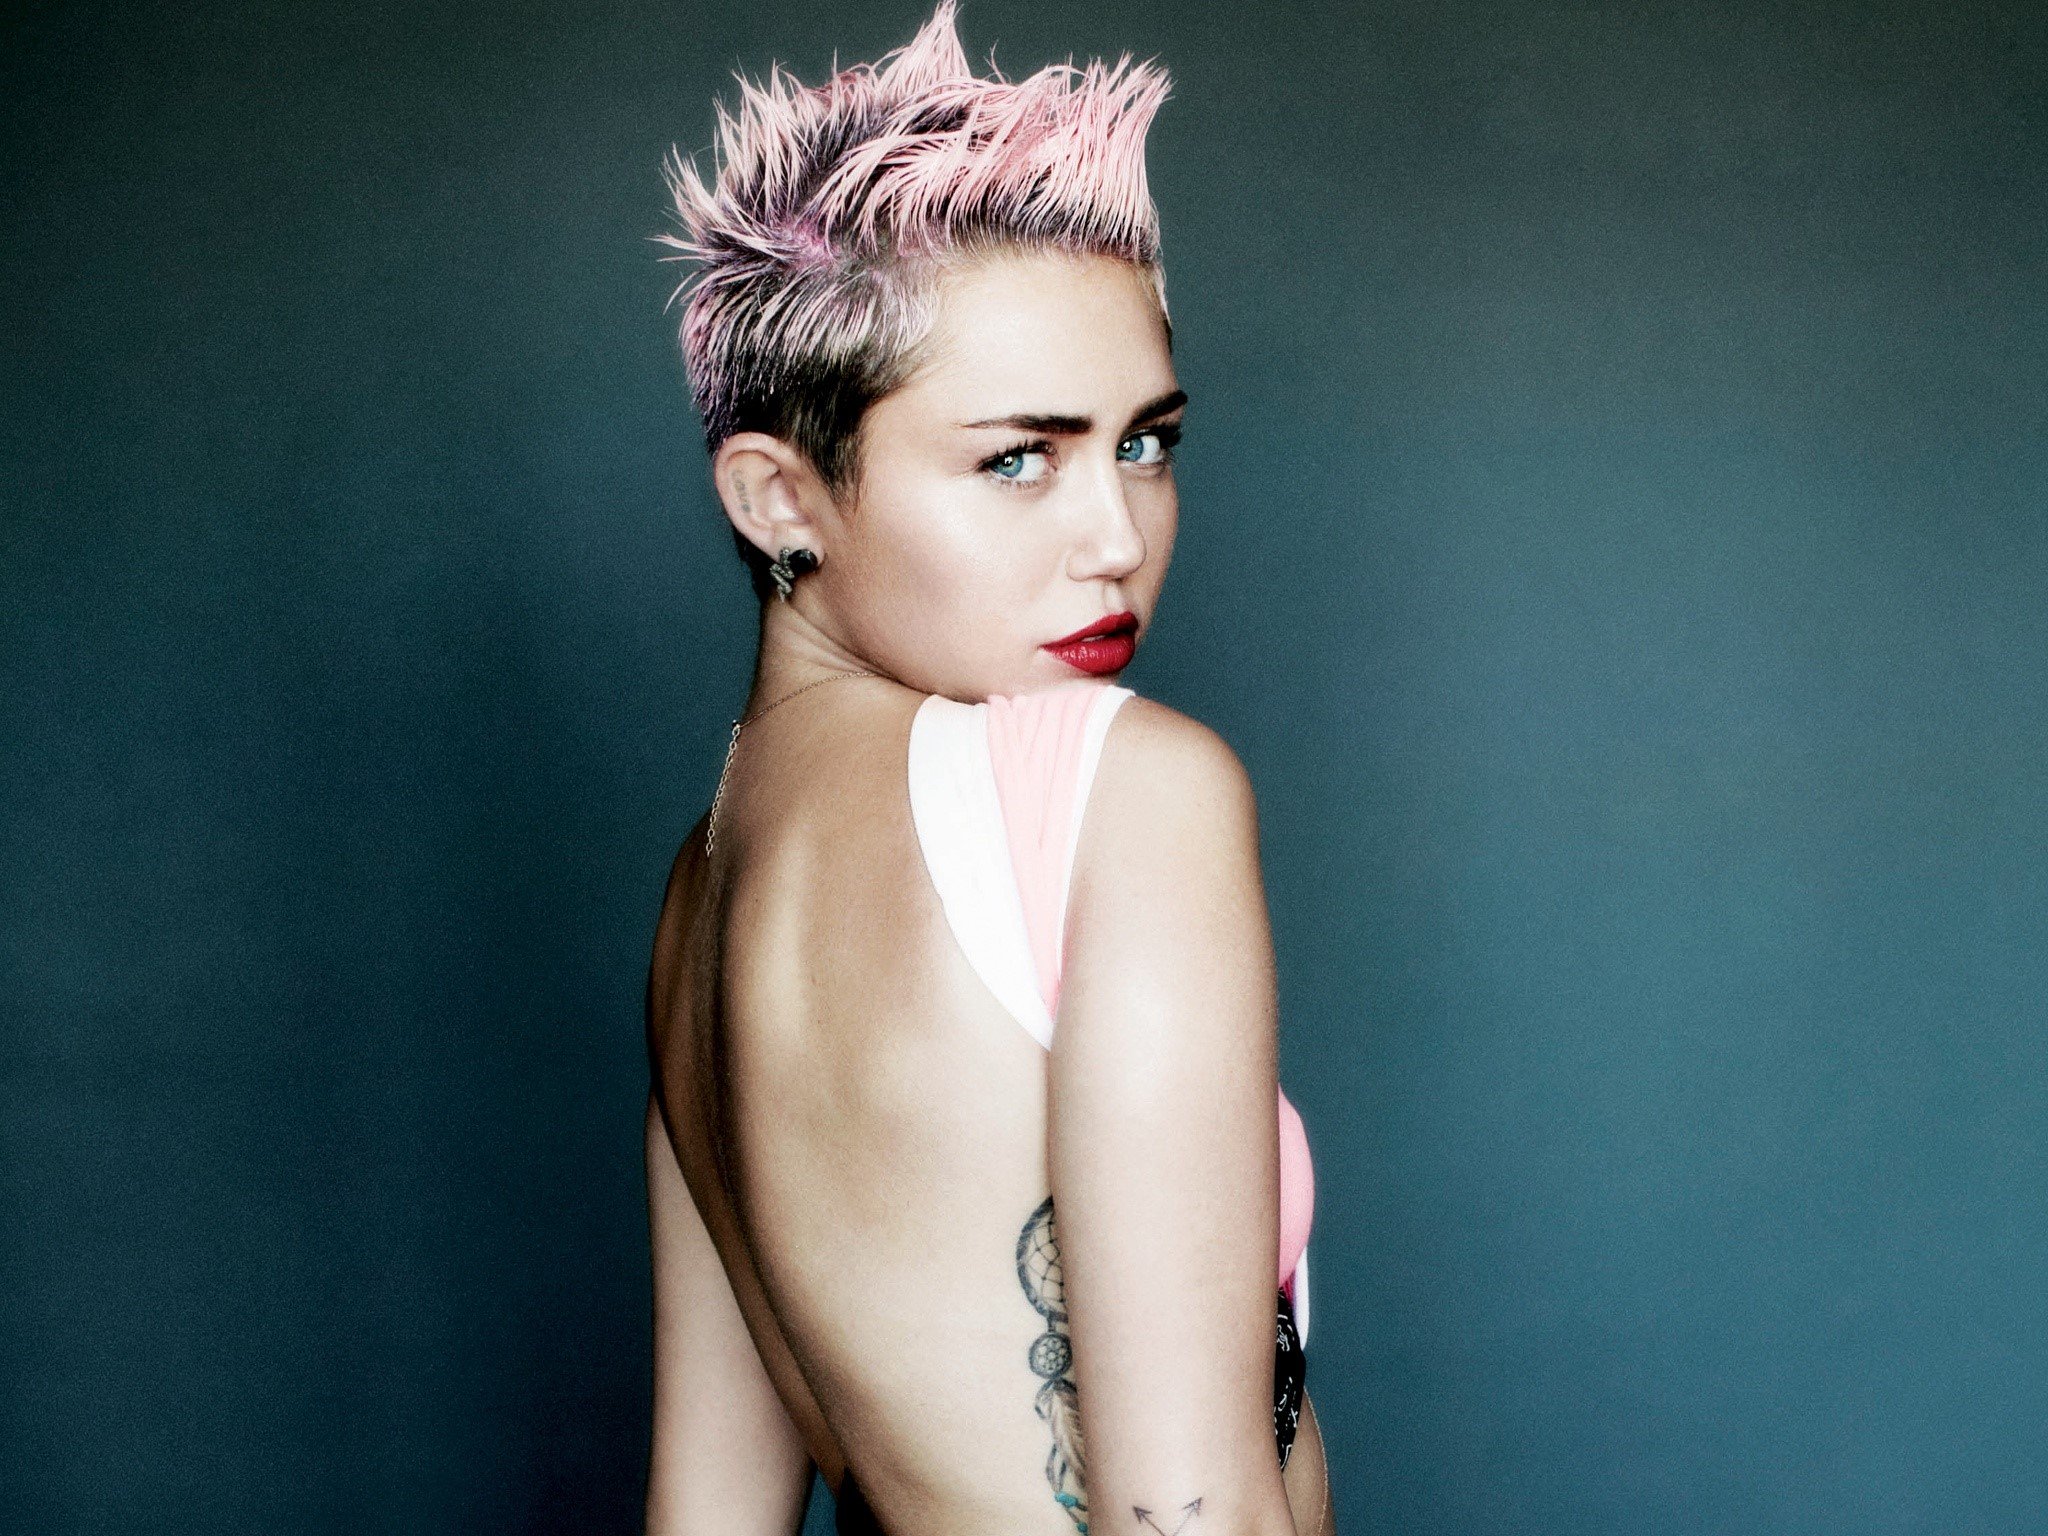 Fondos de pantalla Miley Cyrus para la revista V